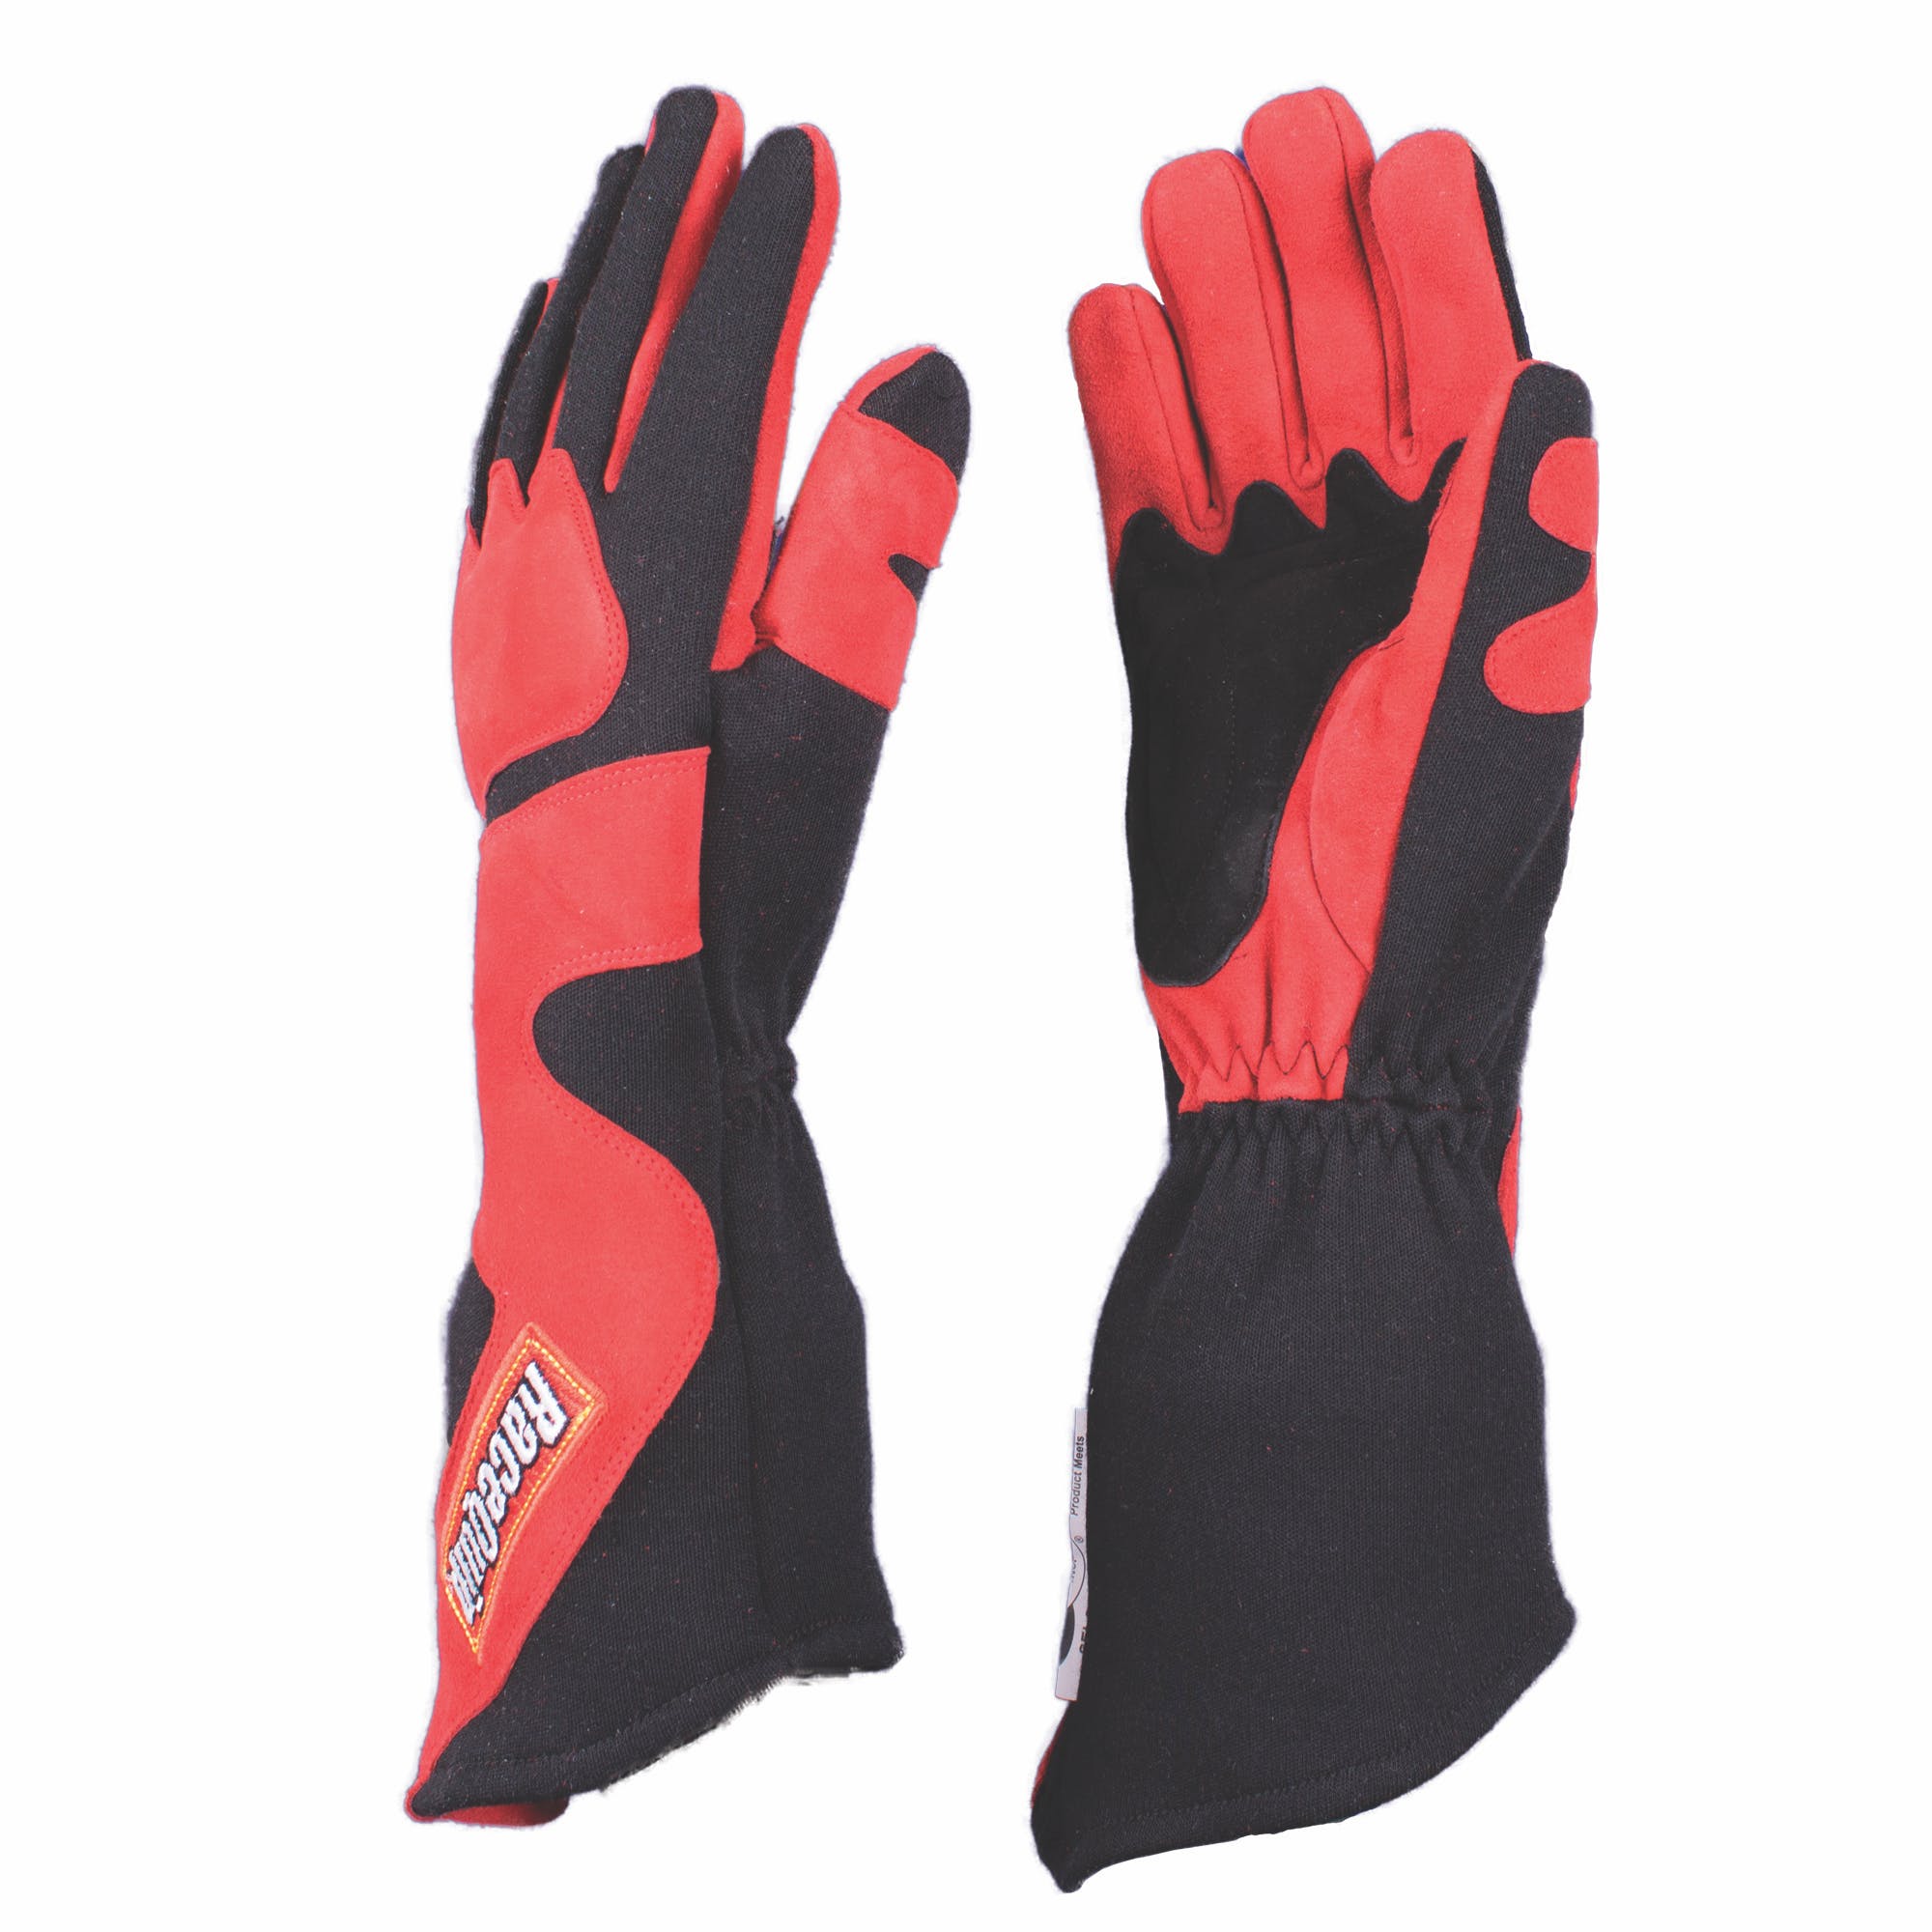 RaceQuip 358103 SFI-5 Angle-Cut Long Gauntlet Racing Gloves (Red/Black, Medium)